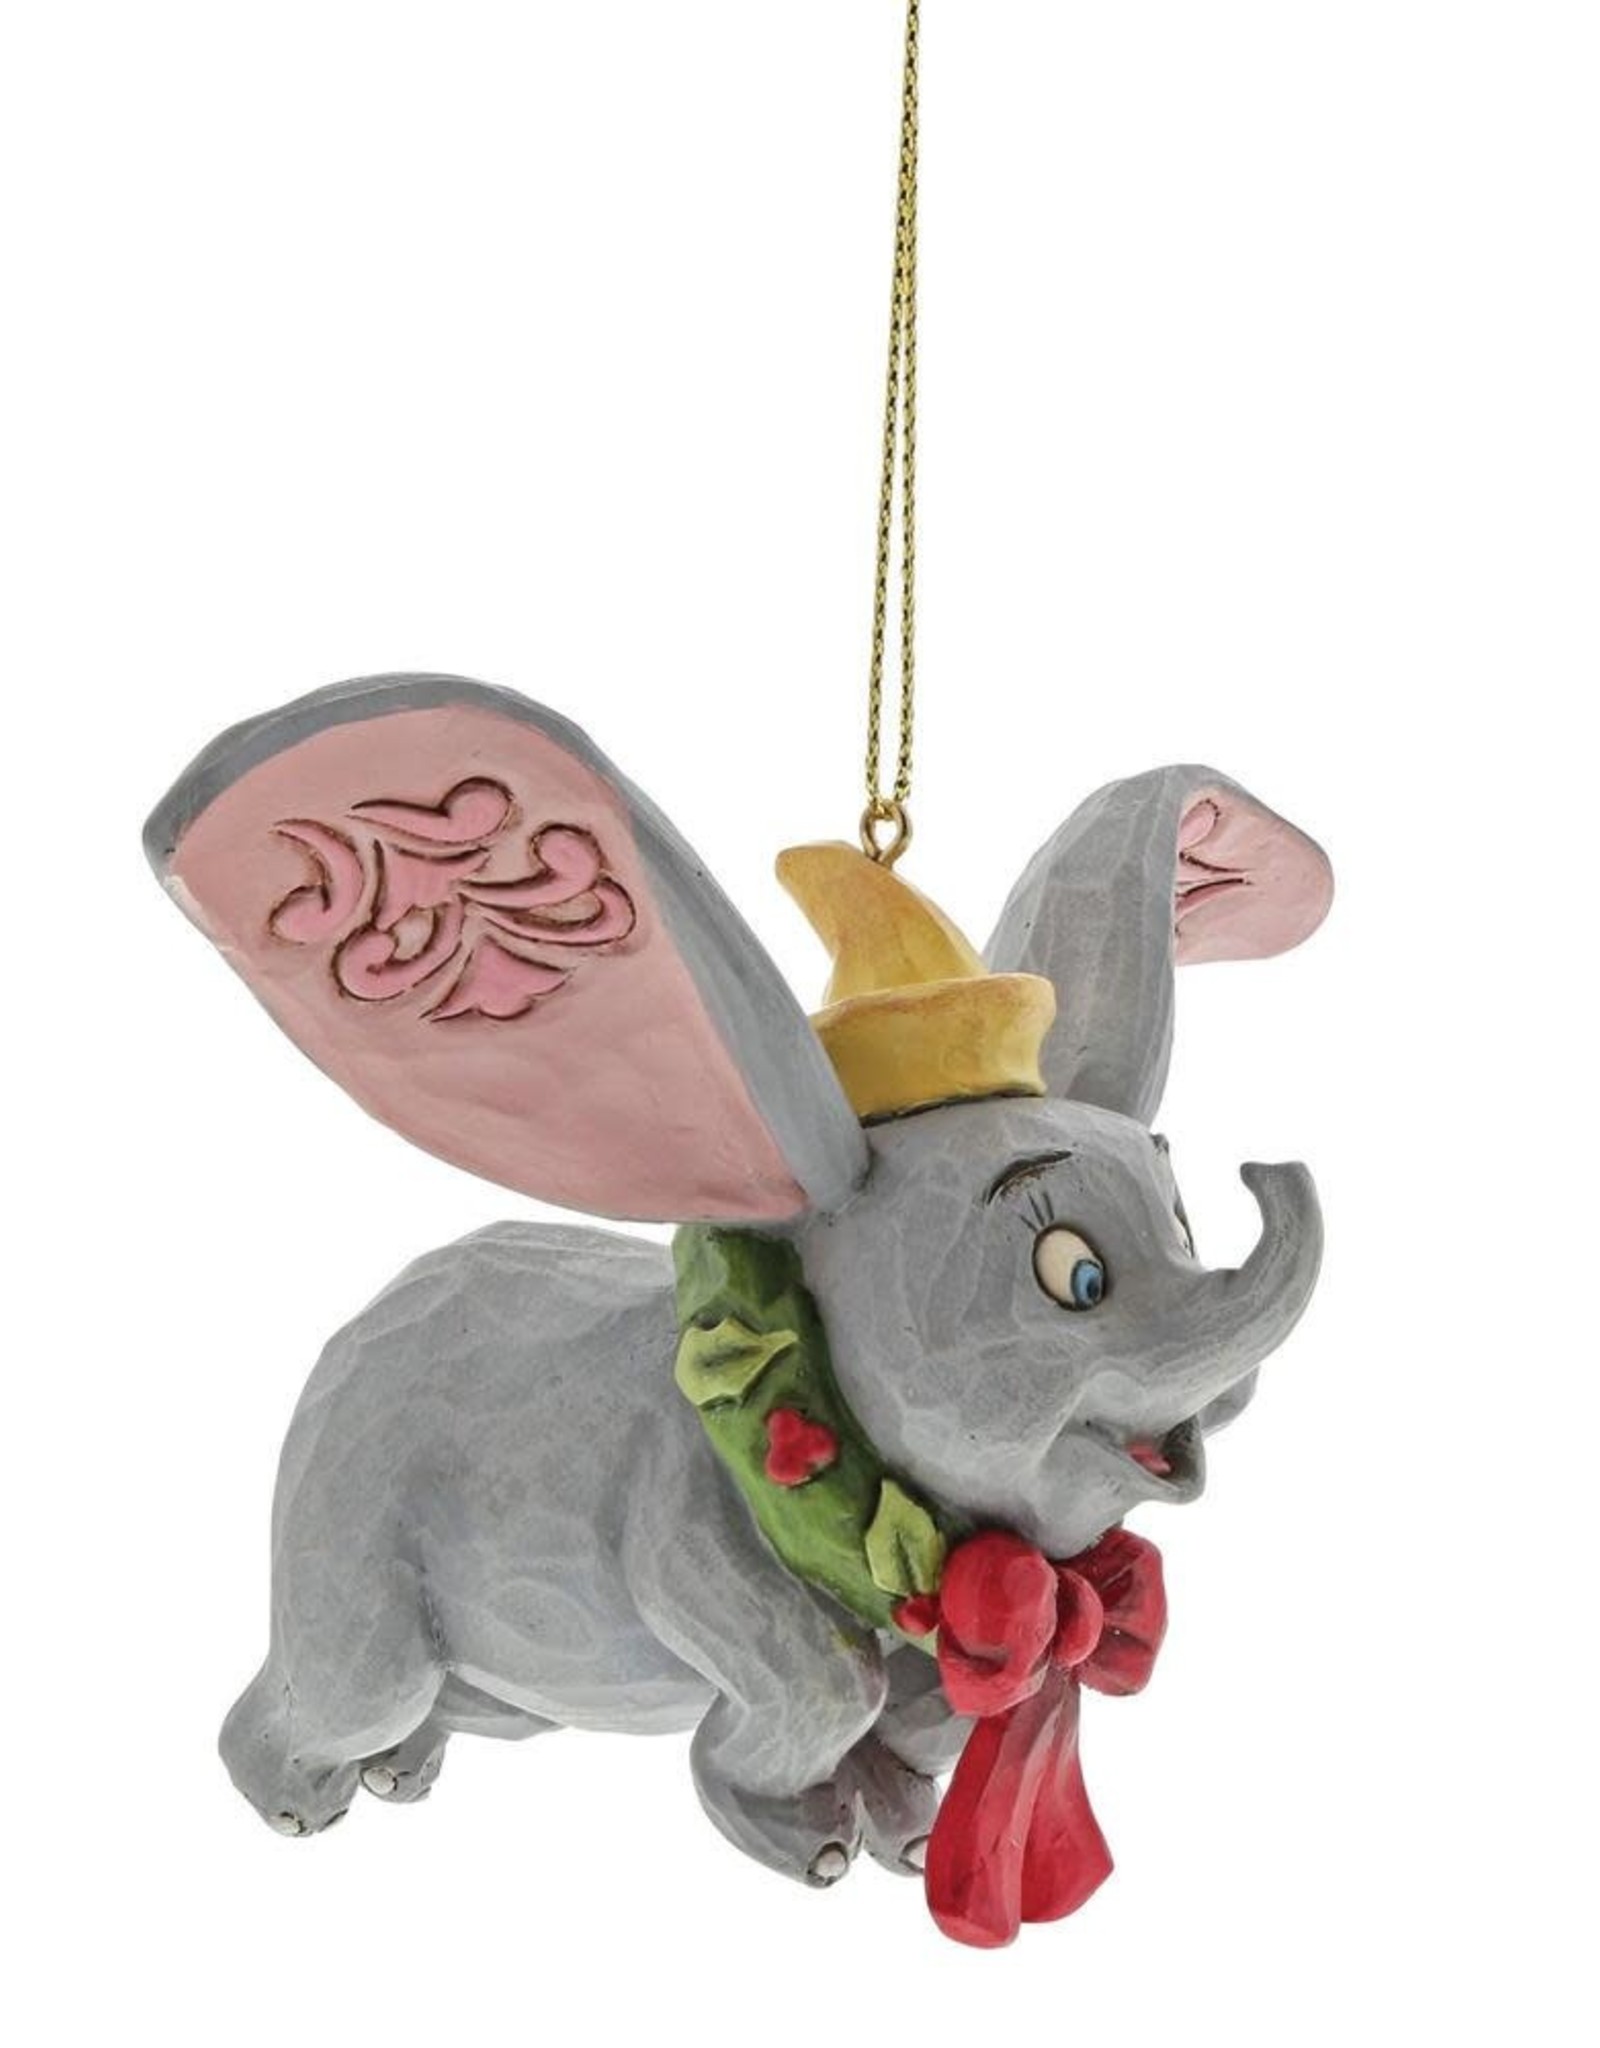 Disney Traditions H/O Dumbo Ornament